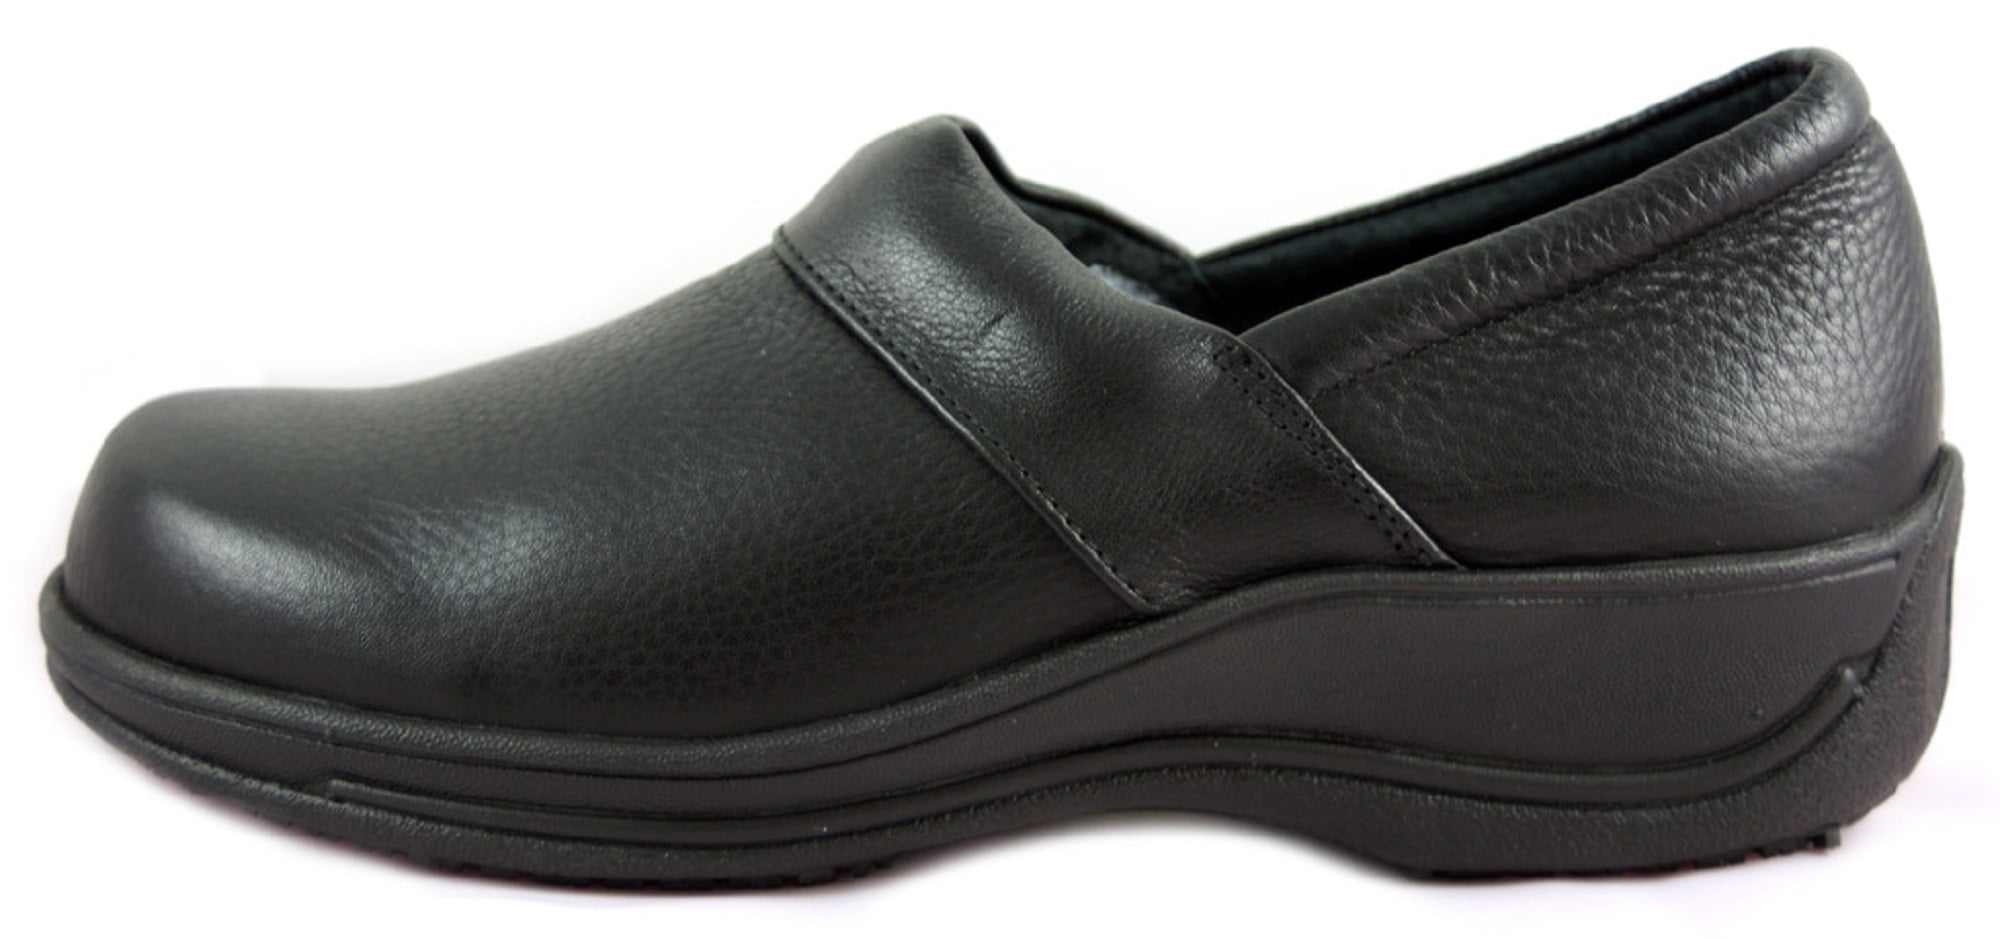 walmart slip resistant boots womens